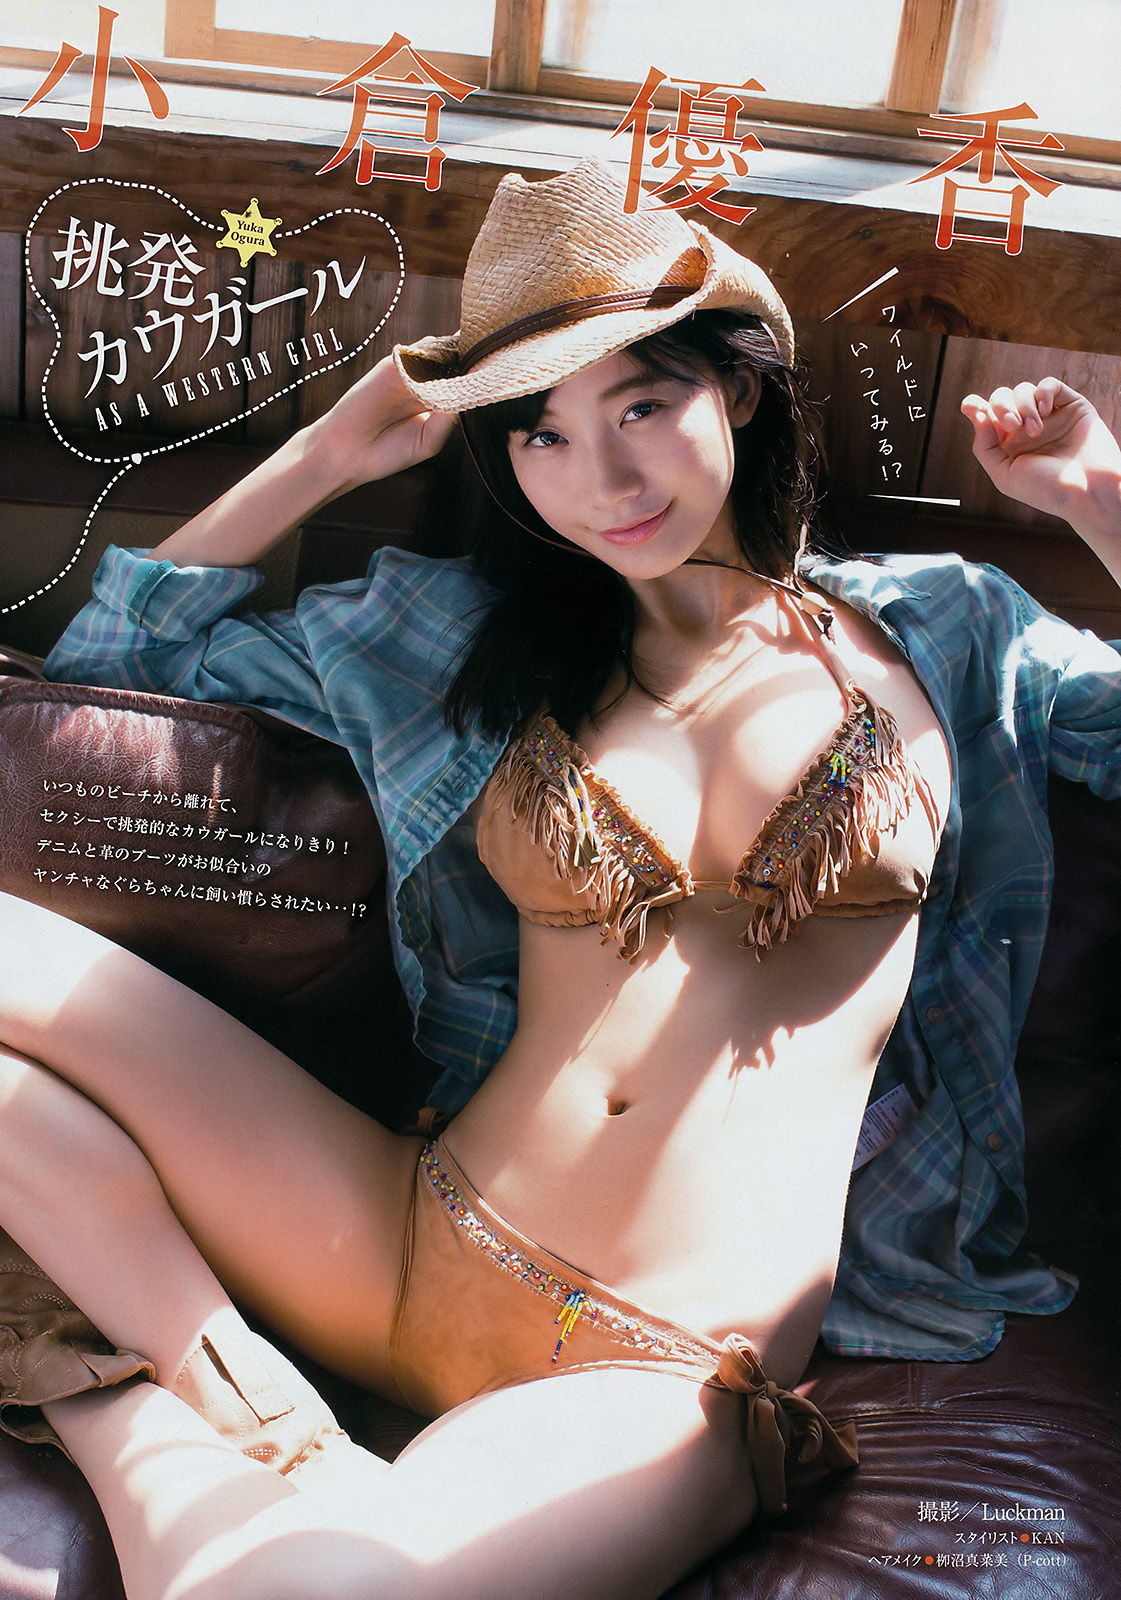 [Young Magazine]美胸大胸:小仓优香高品质壁纸图片珍藏版(11P)